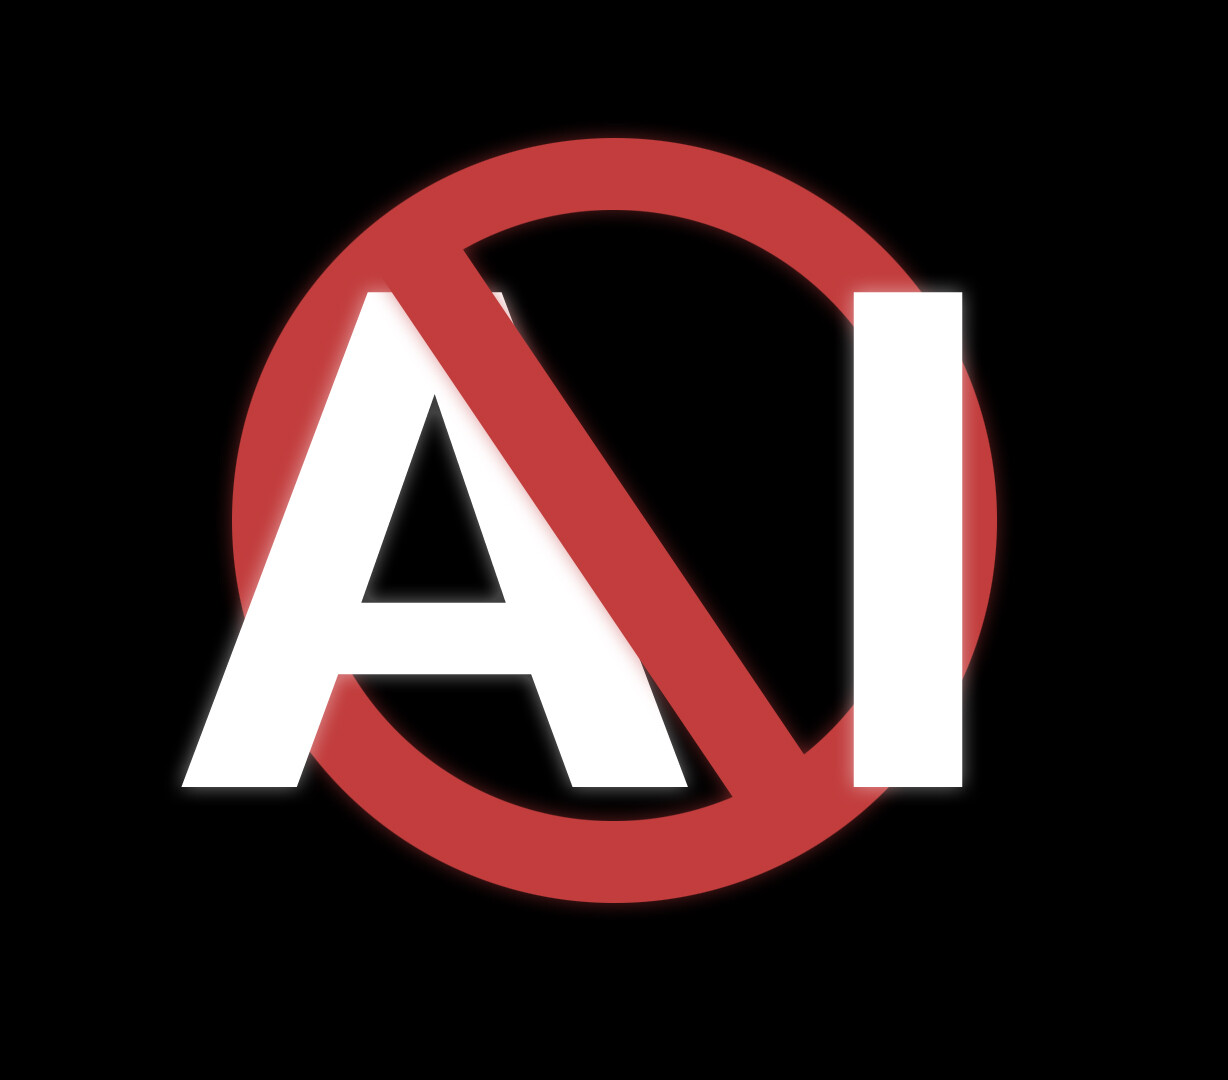 ArtStation - I don't hate AI, I hate people who use AI indiscriminately